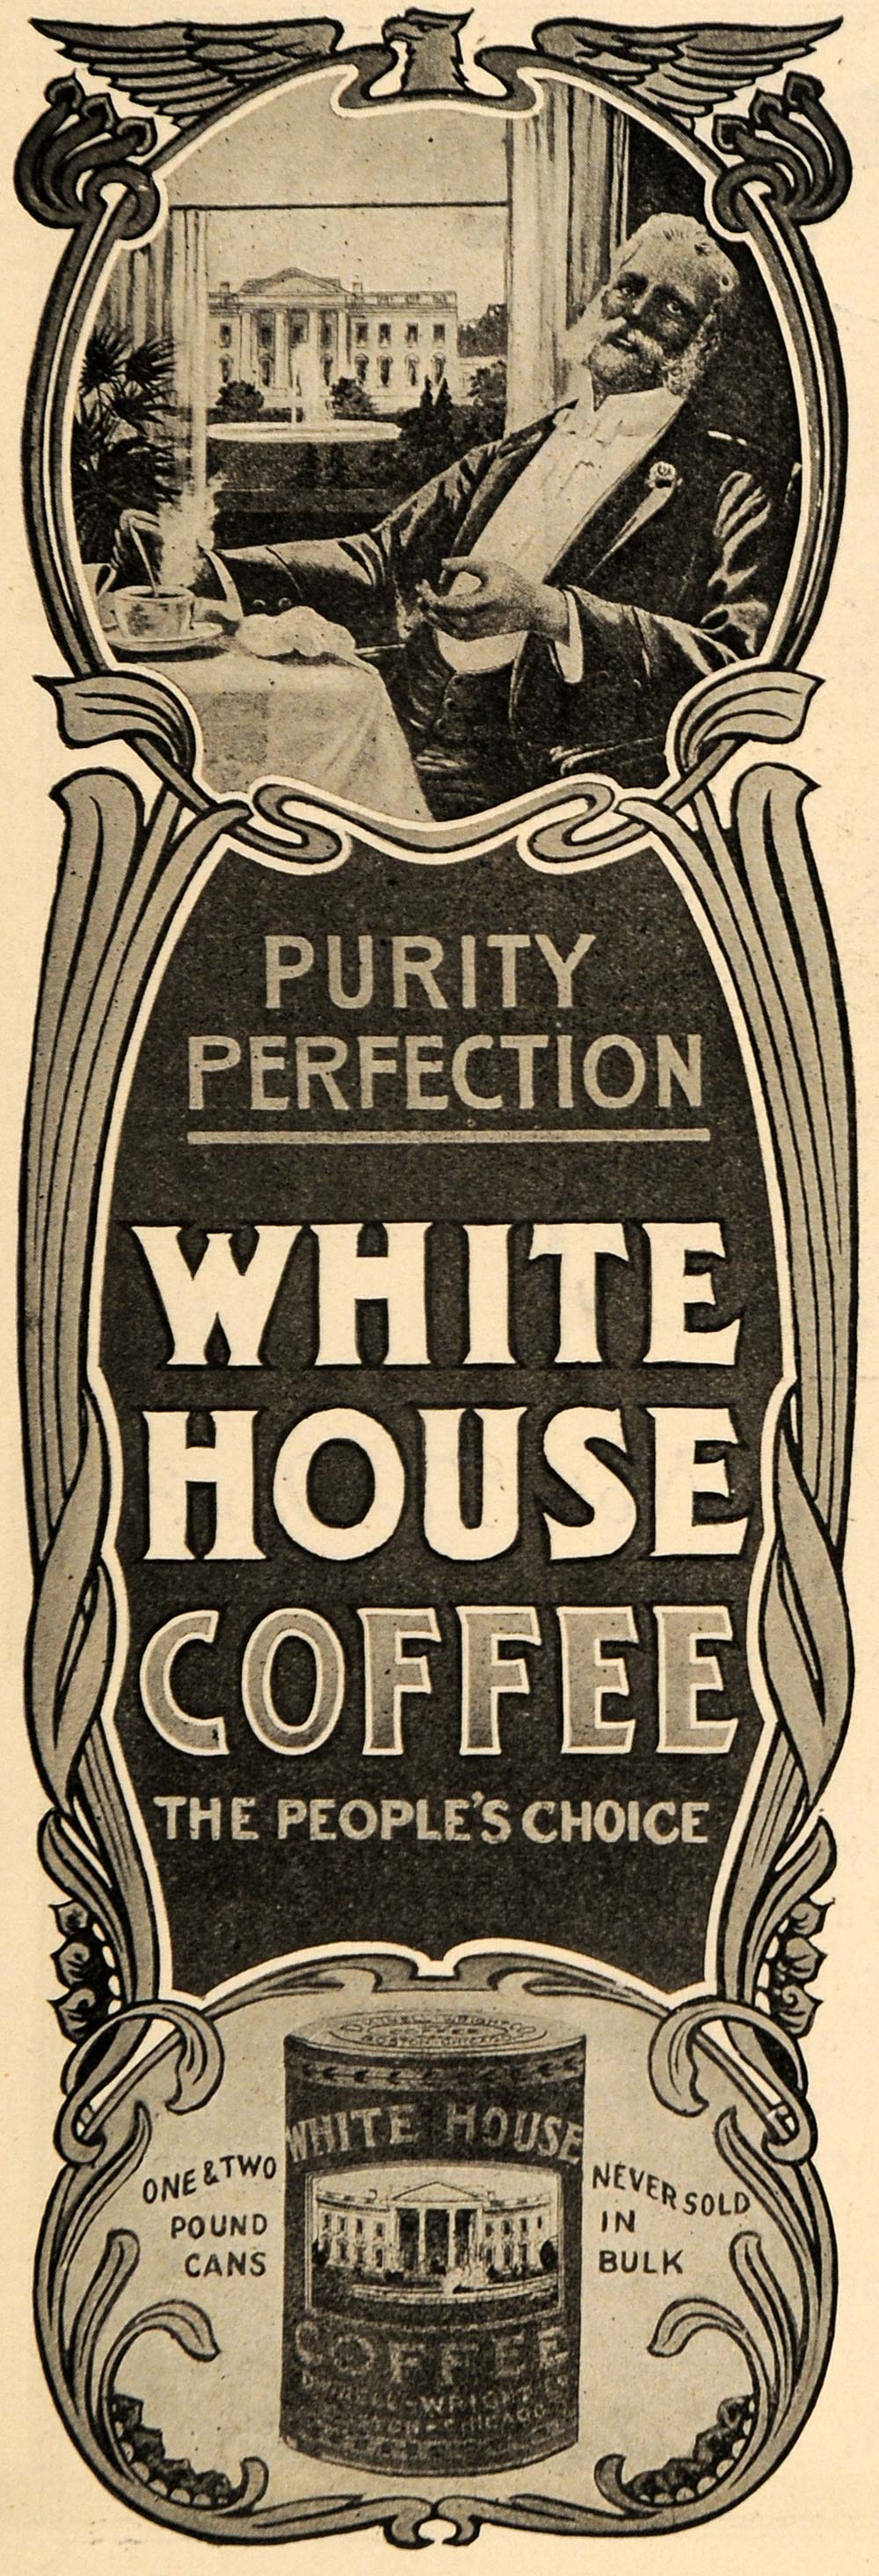 1904 Ad Dwinell-Wright Co. White House Coffee Beverage - ORIGINAL TIN5